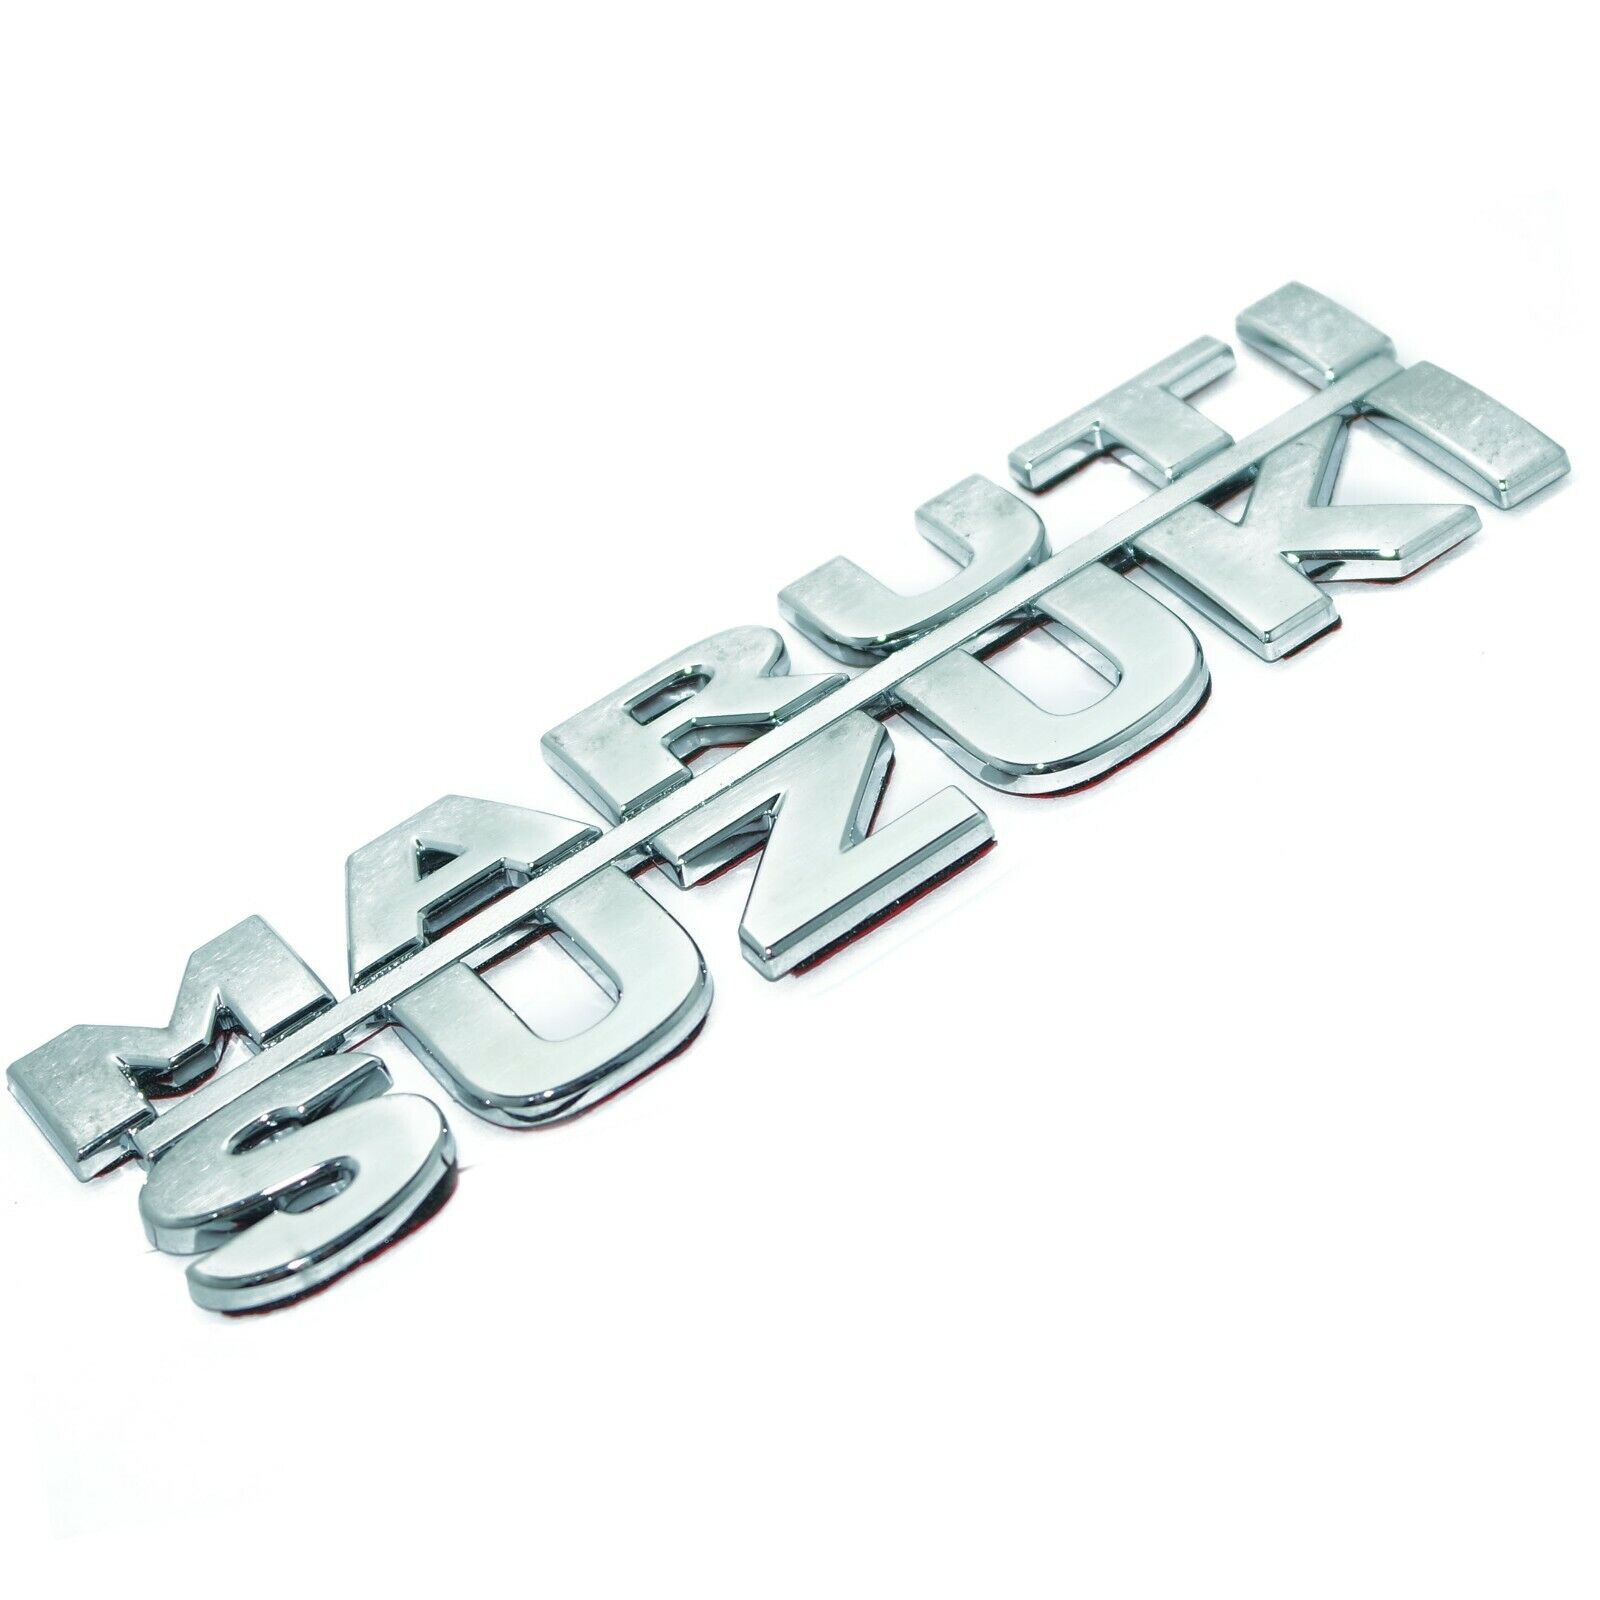 3D Chrome Plated Emblem Logo Decal for Suzuki Cars  